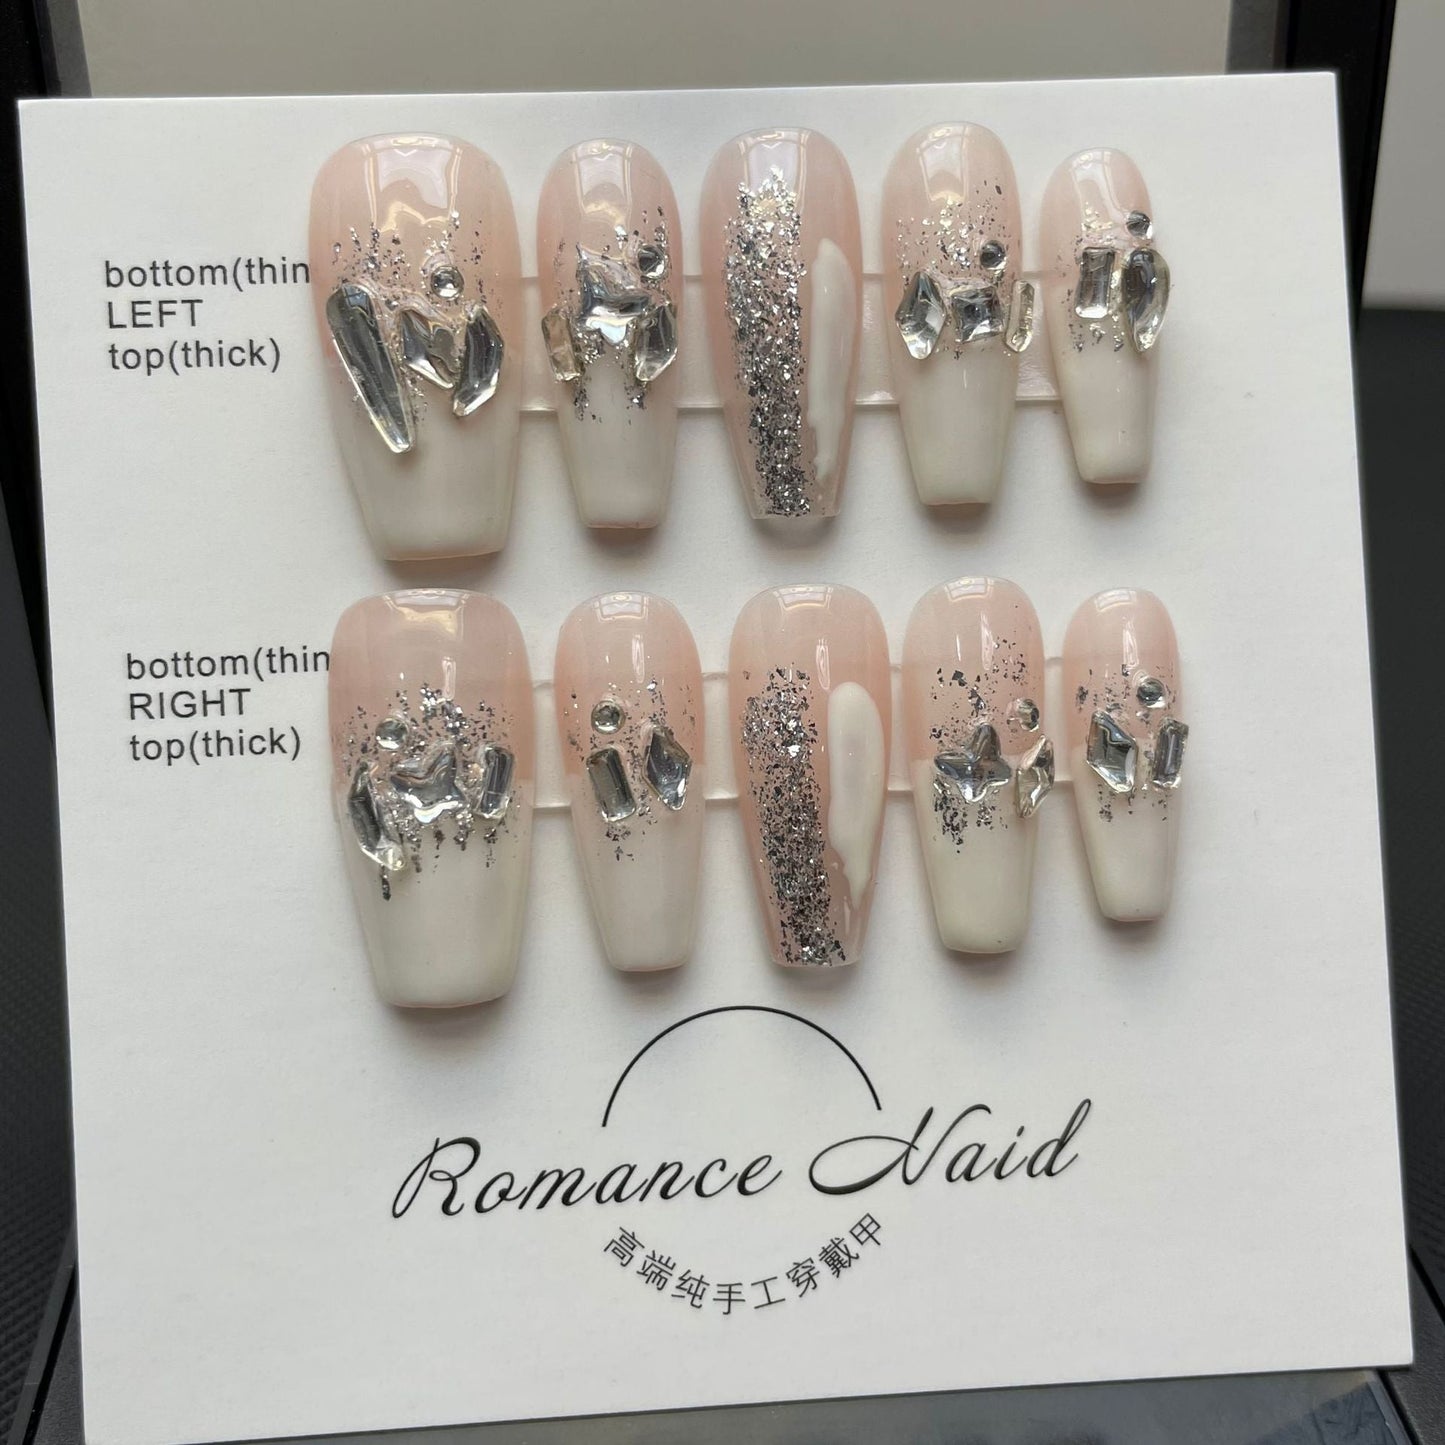 662 Rhinestone style press on nails 100% handmade false nails pink white